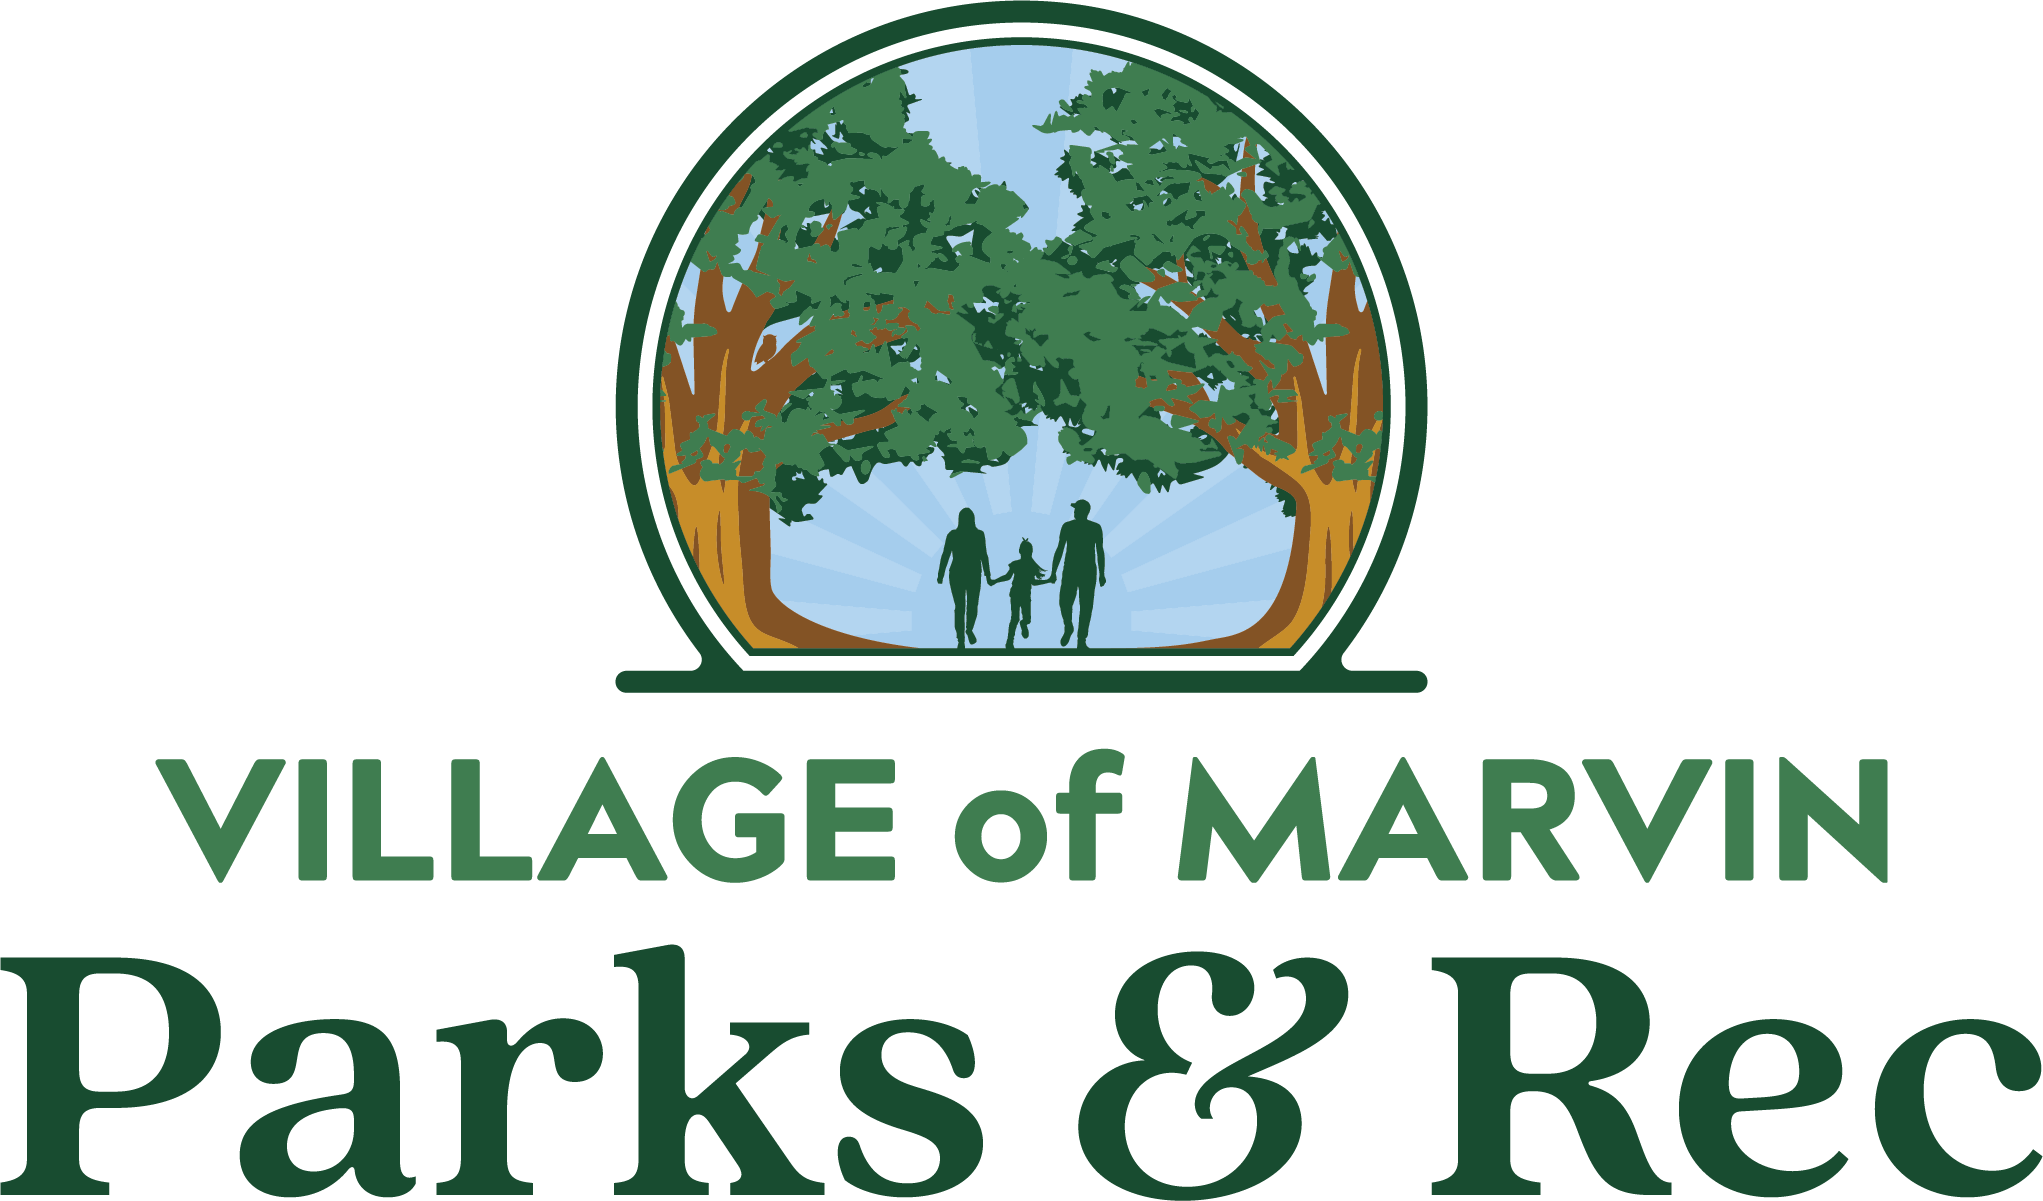 Marvin Parks & Rec Logo